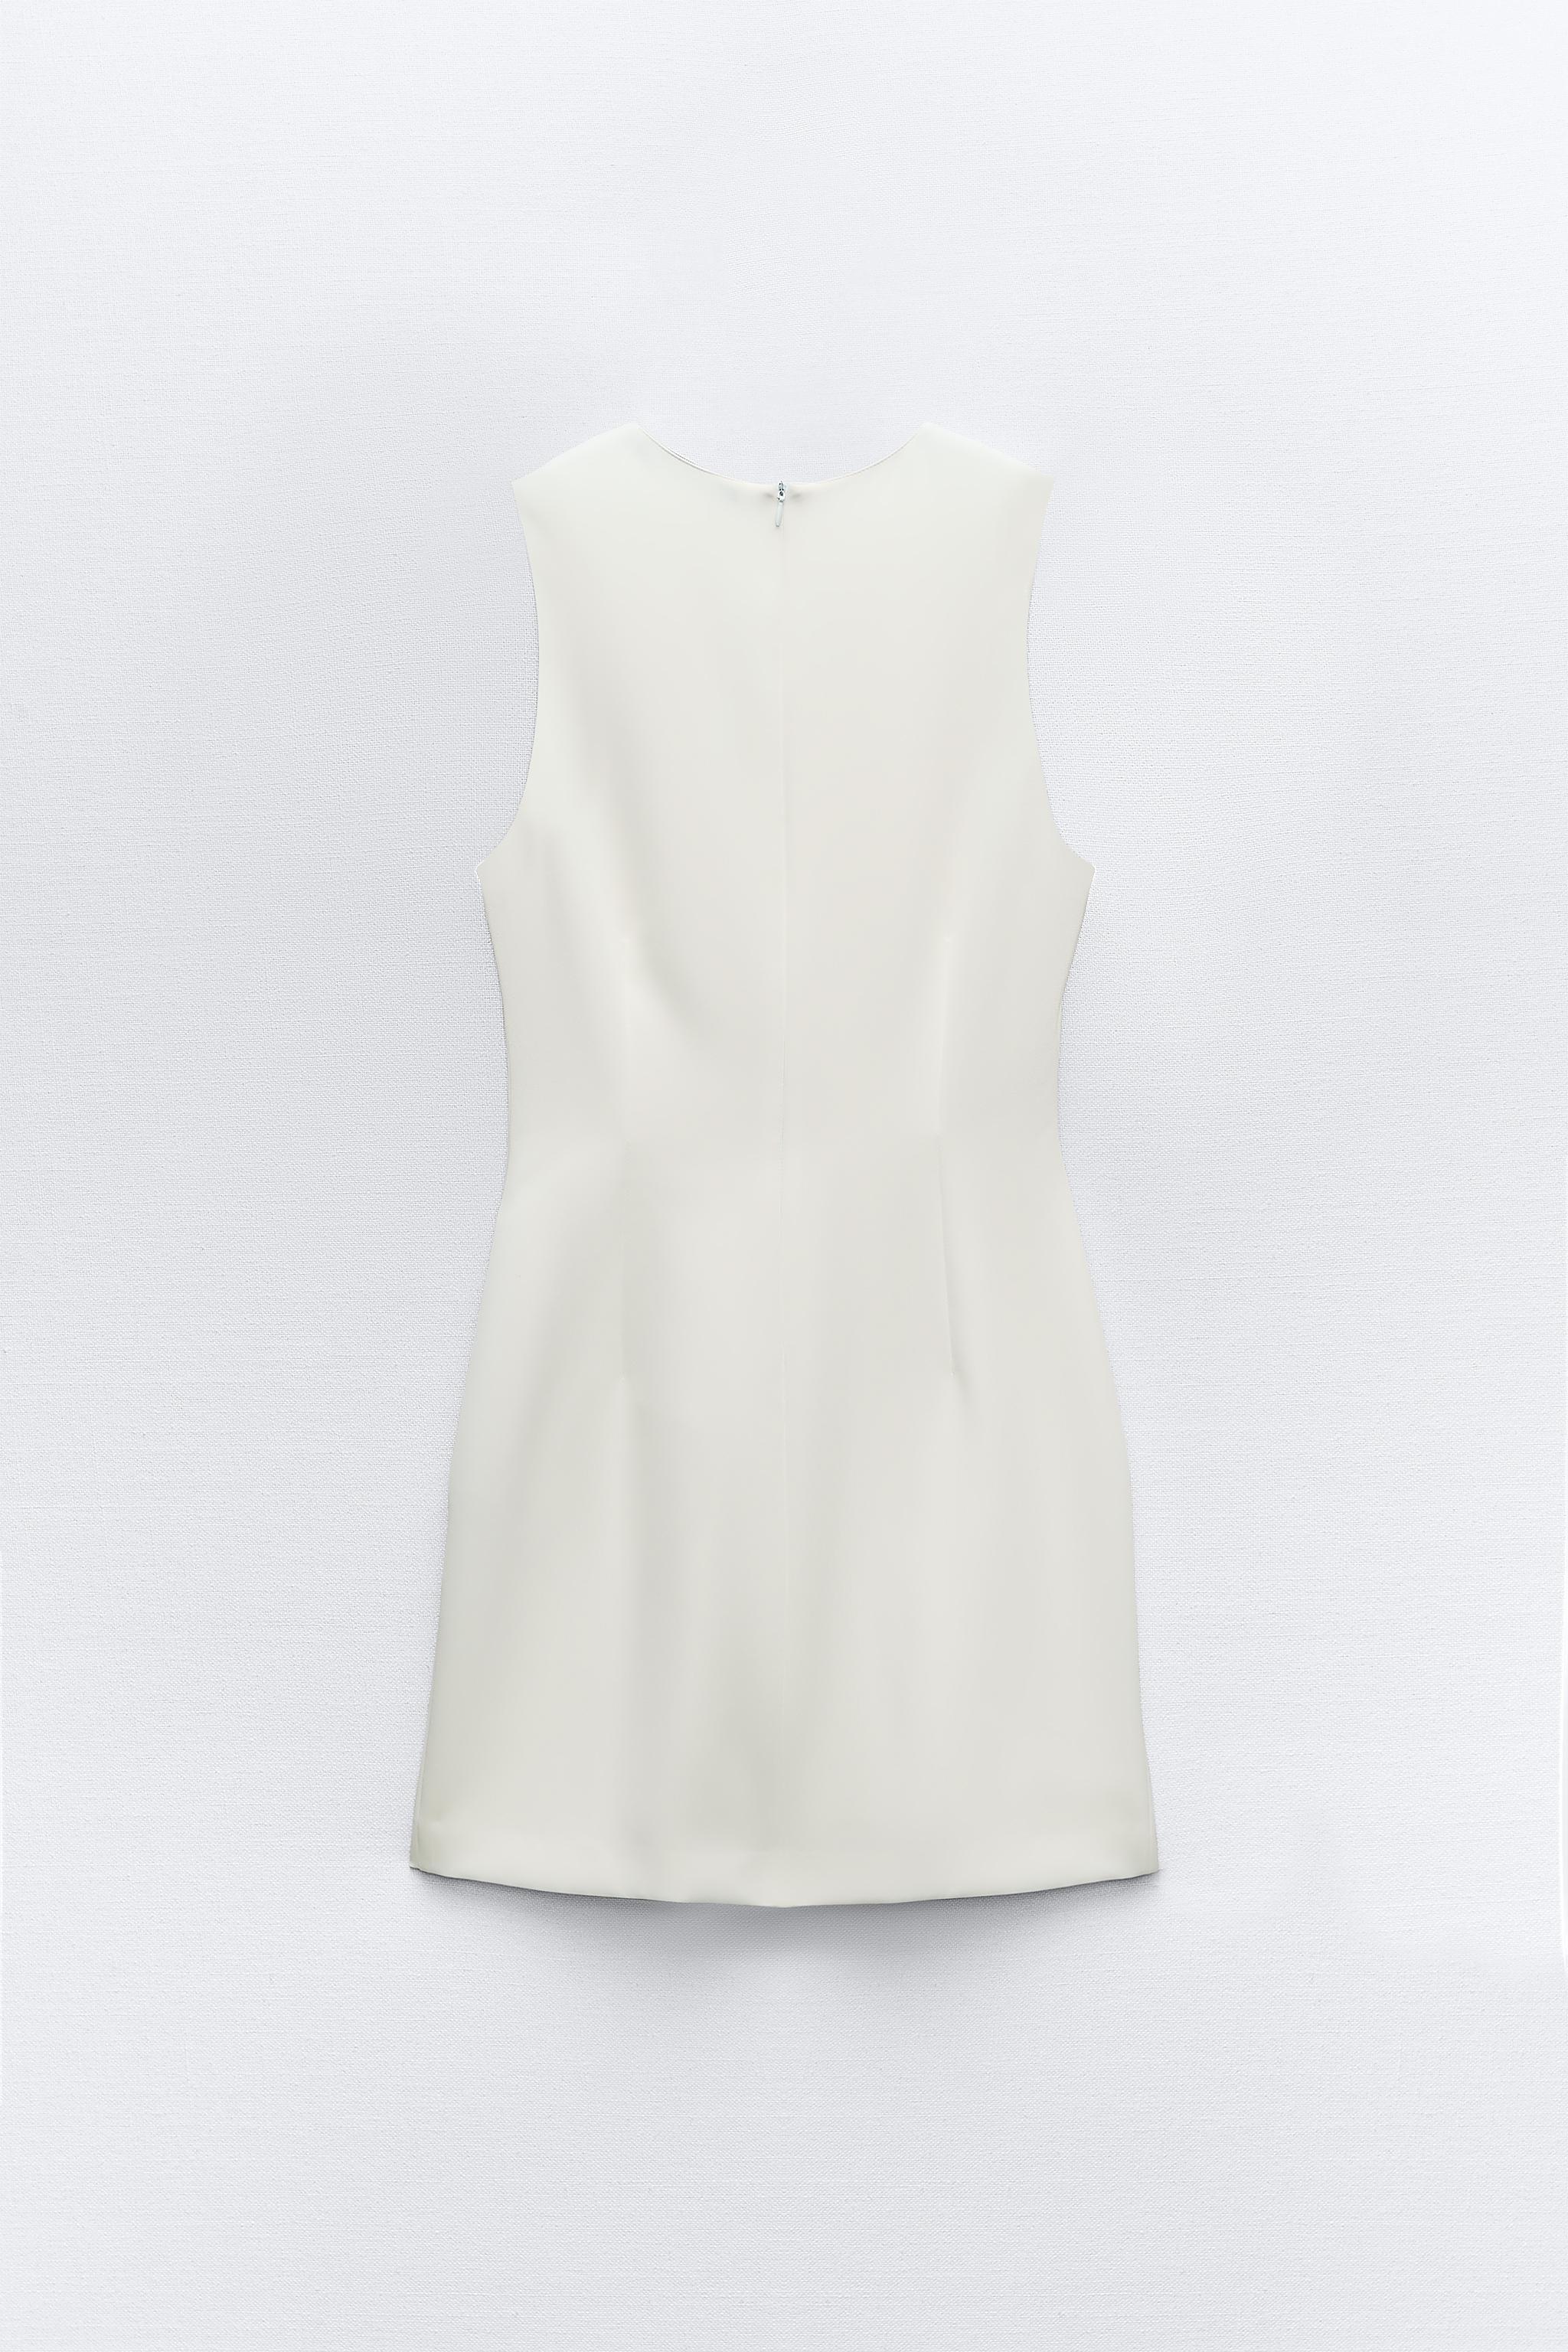 ZARA Denim Corset Dress White Size XS - $50 (23% Off Retail) - From Brindley